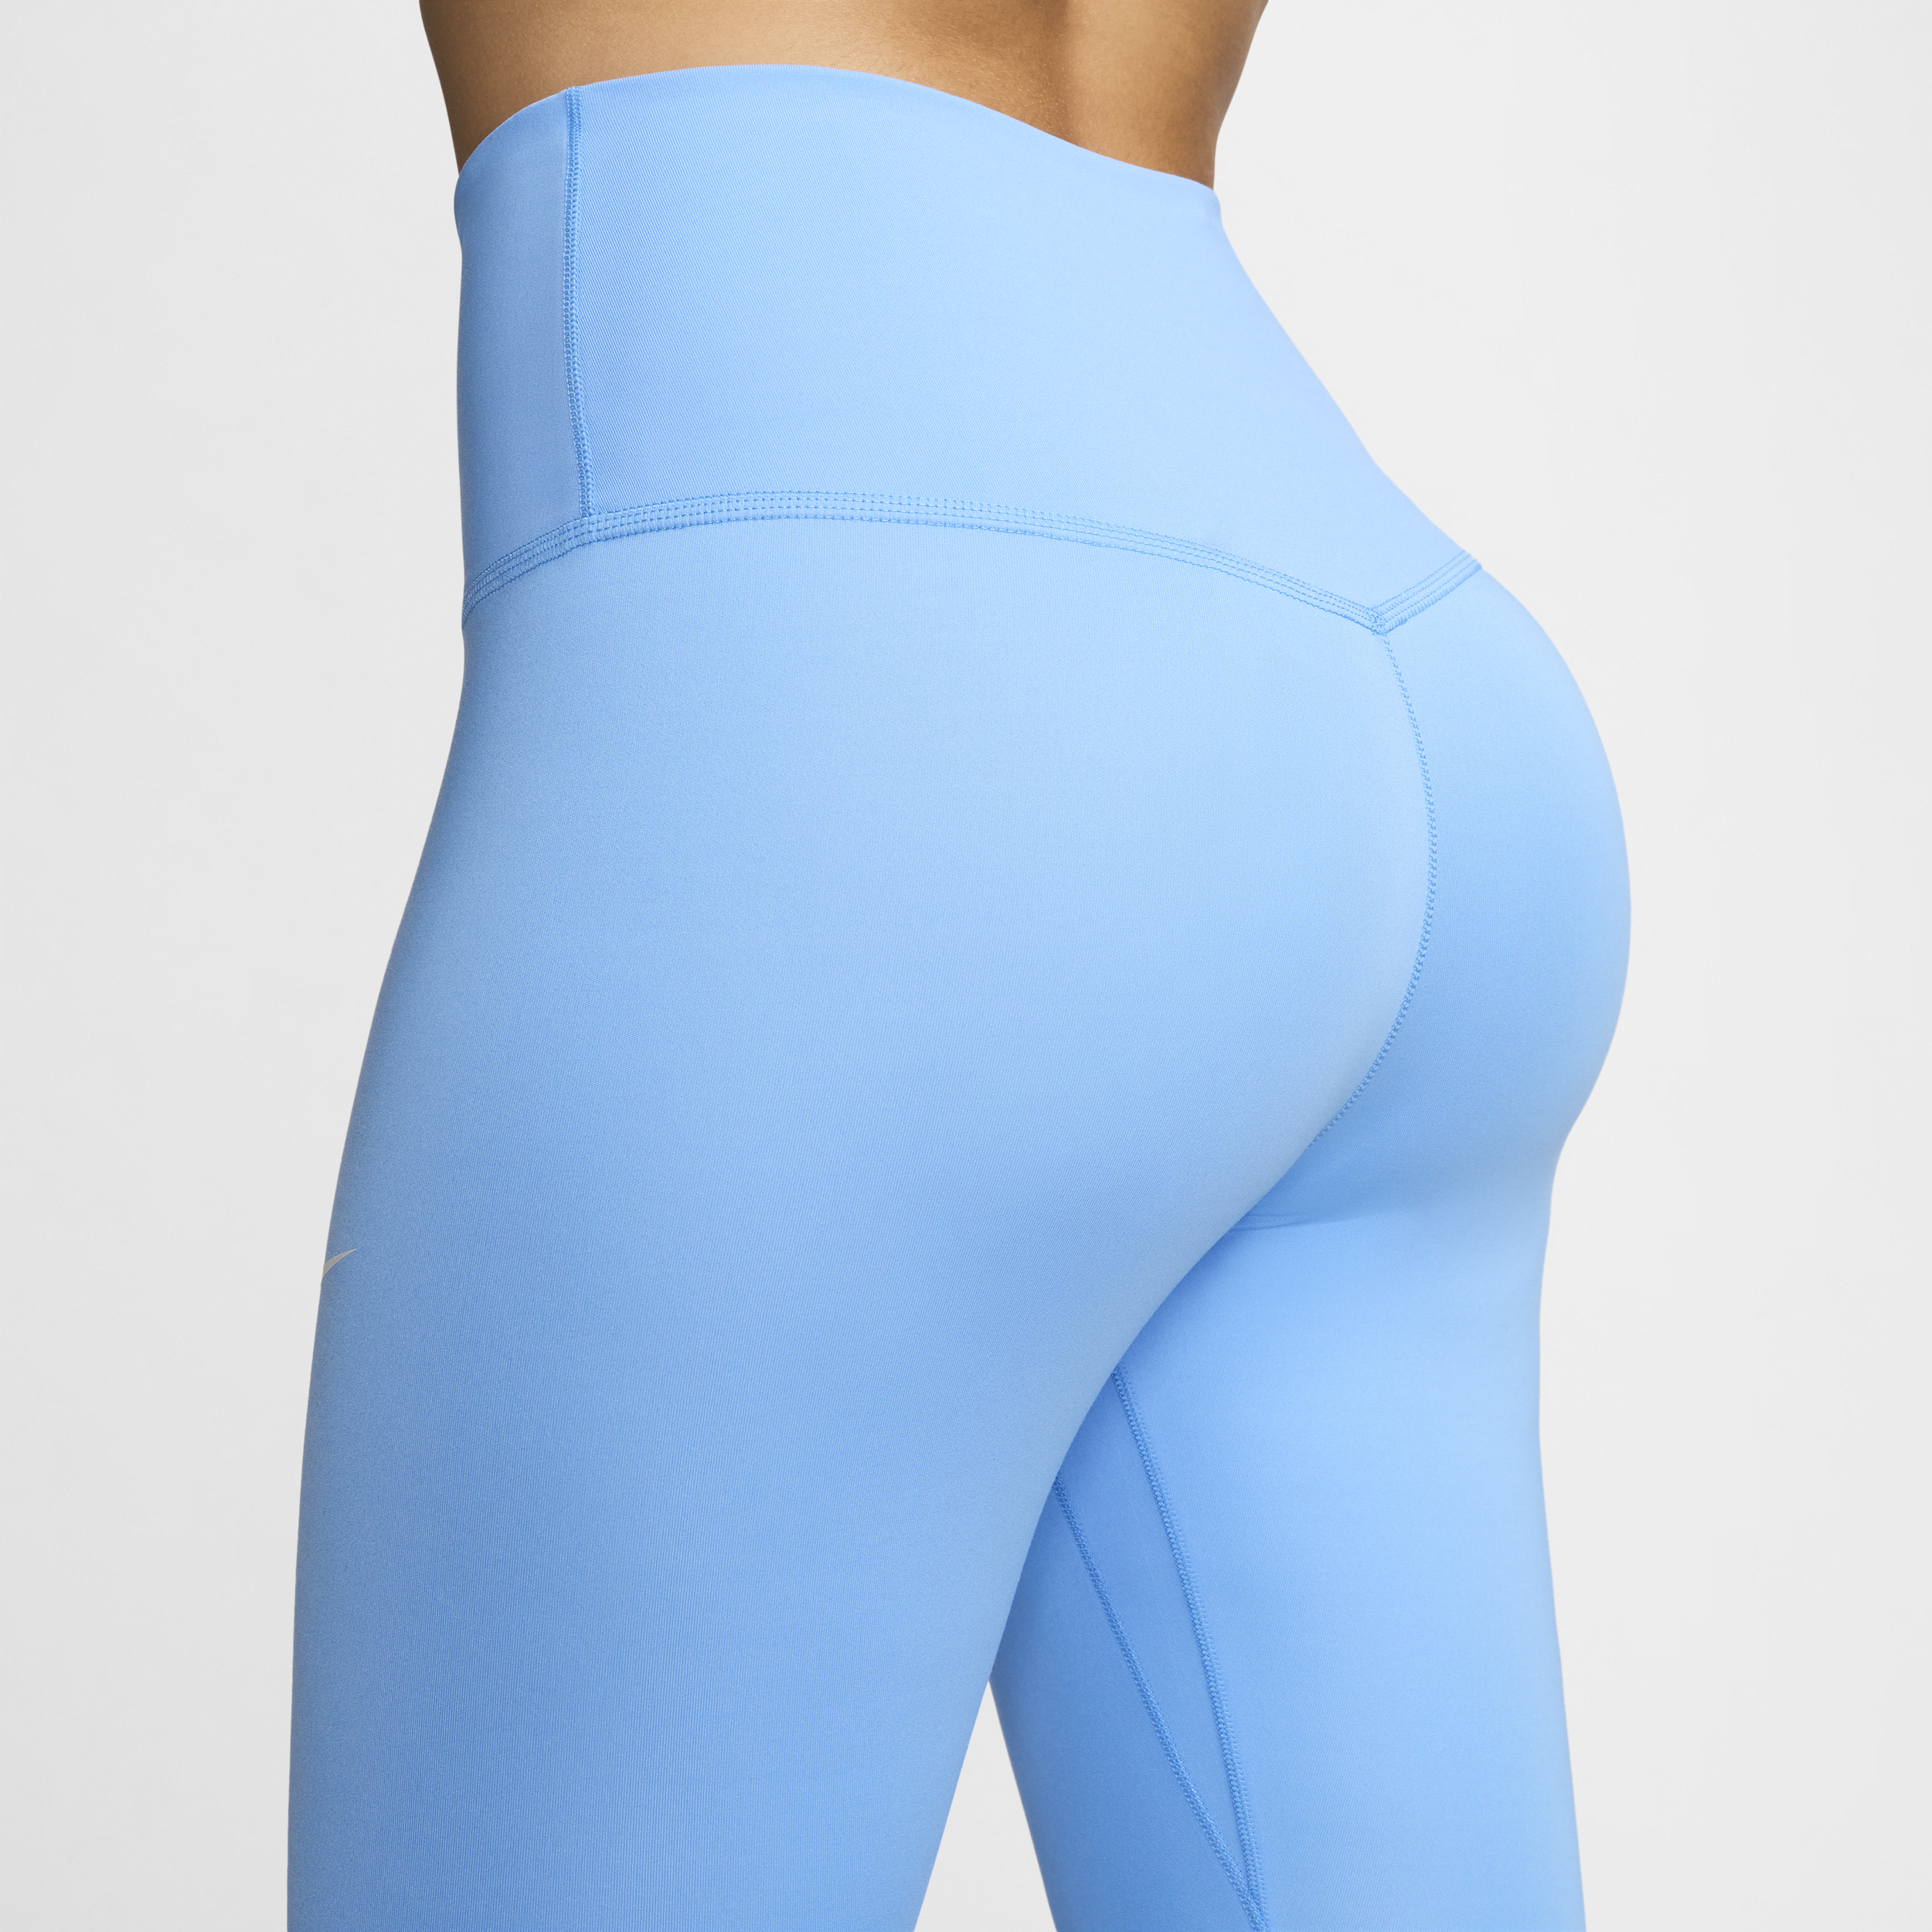 Nike One lange legging met hoge taille voor dames Blauw